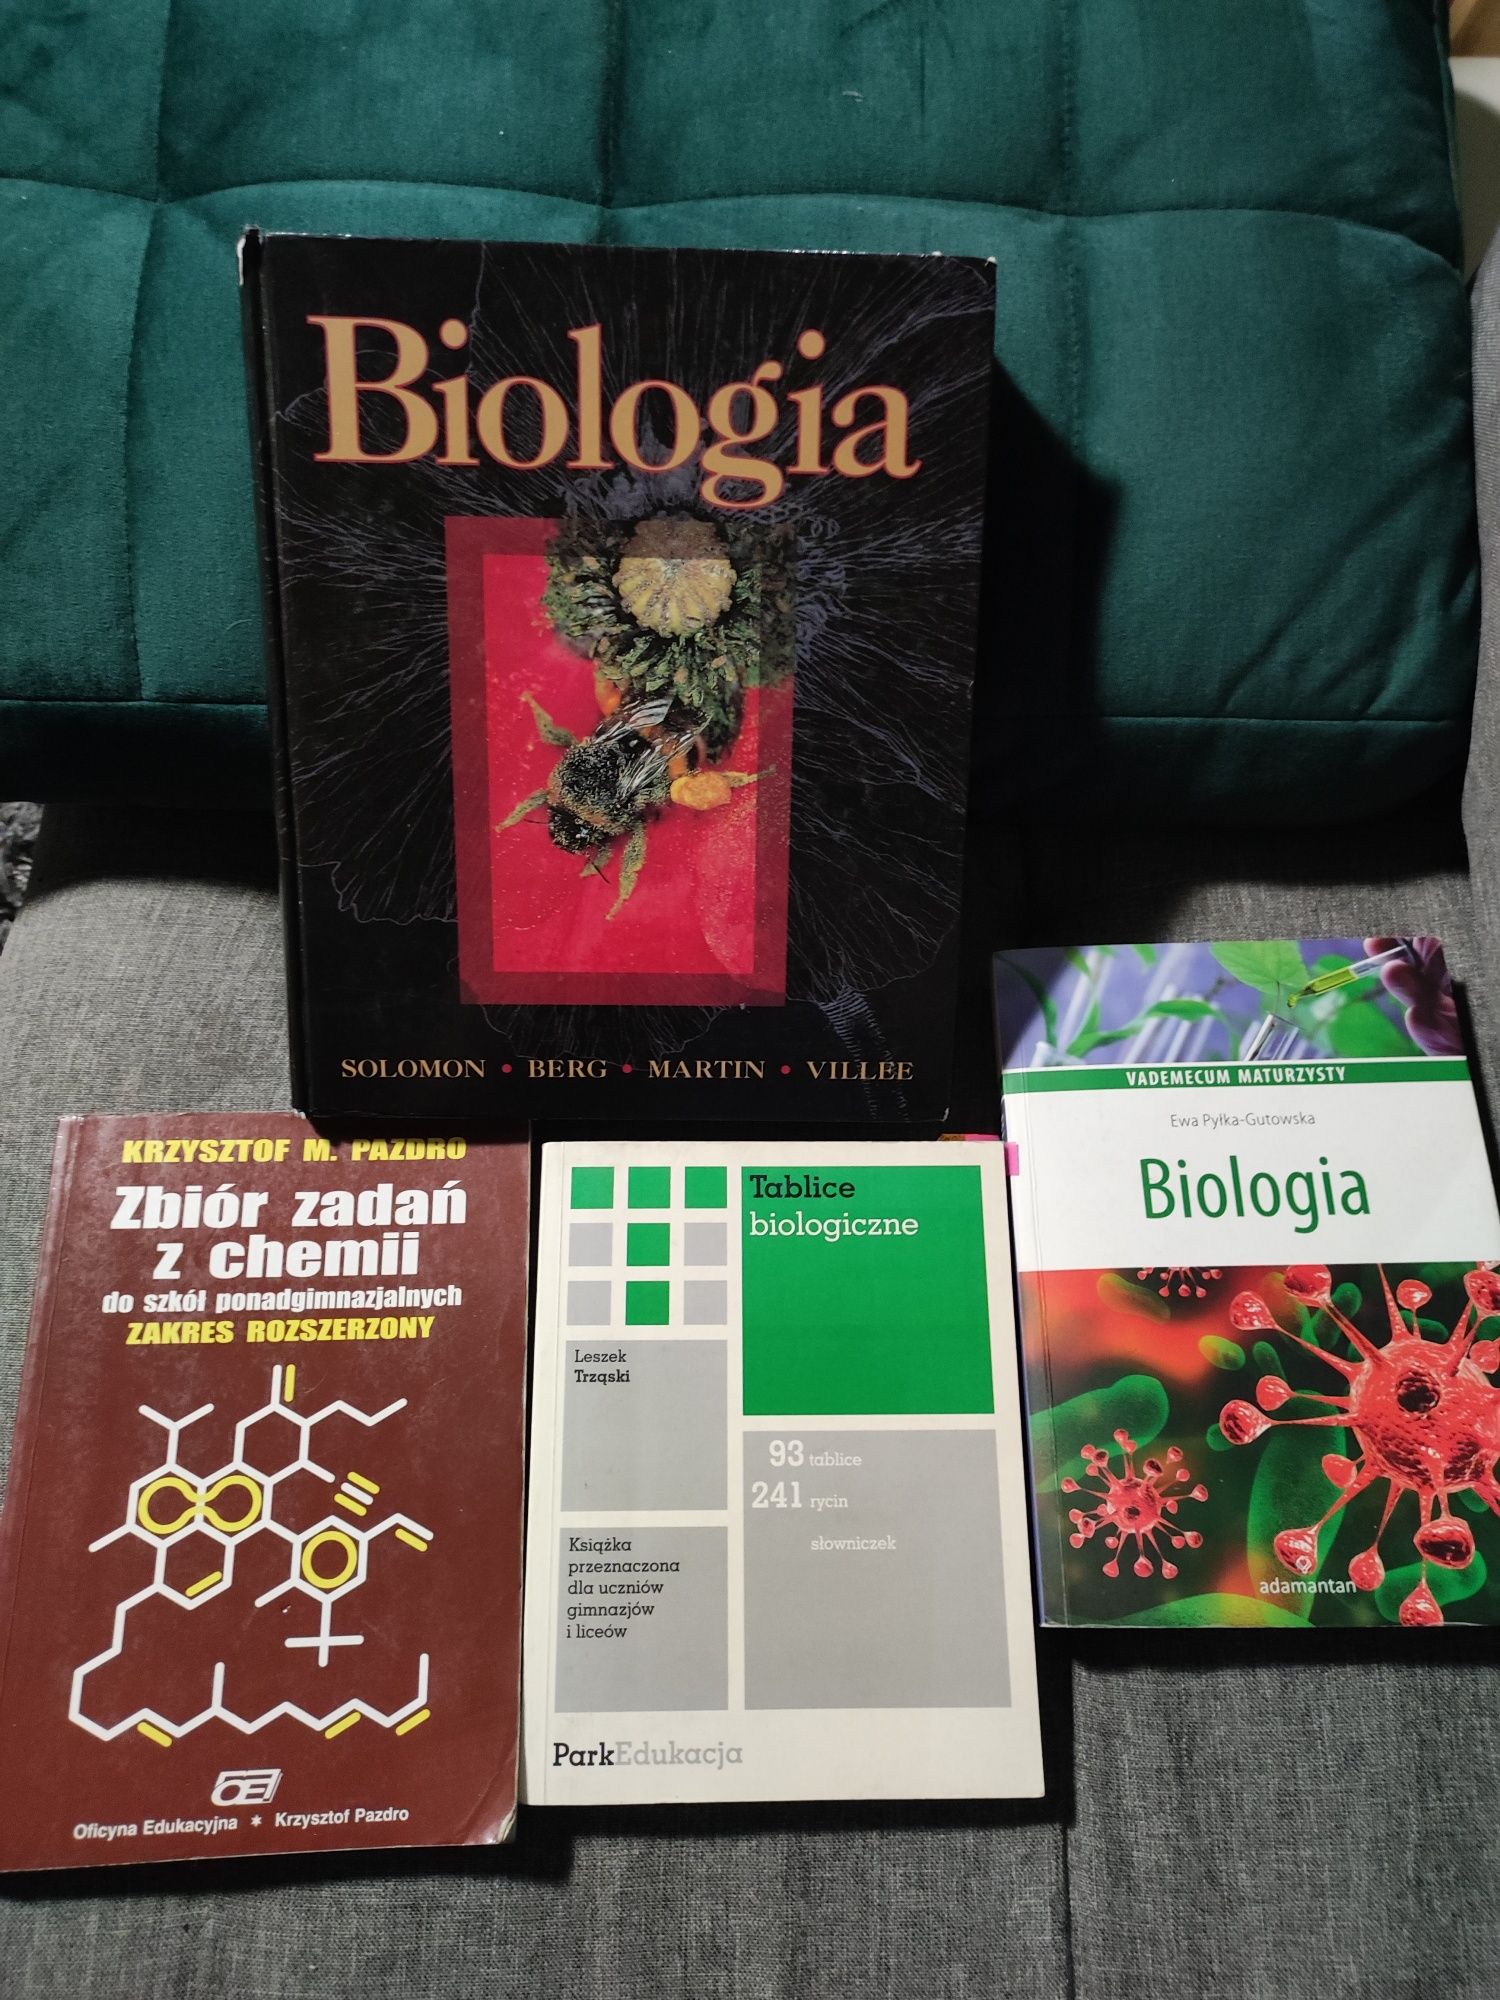 Biologia, chemia, villee, Pazdro,  książki matura rozszerzona